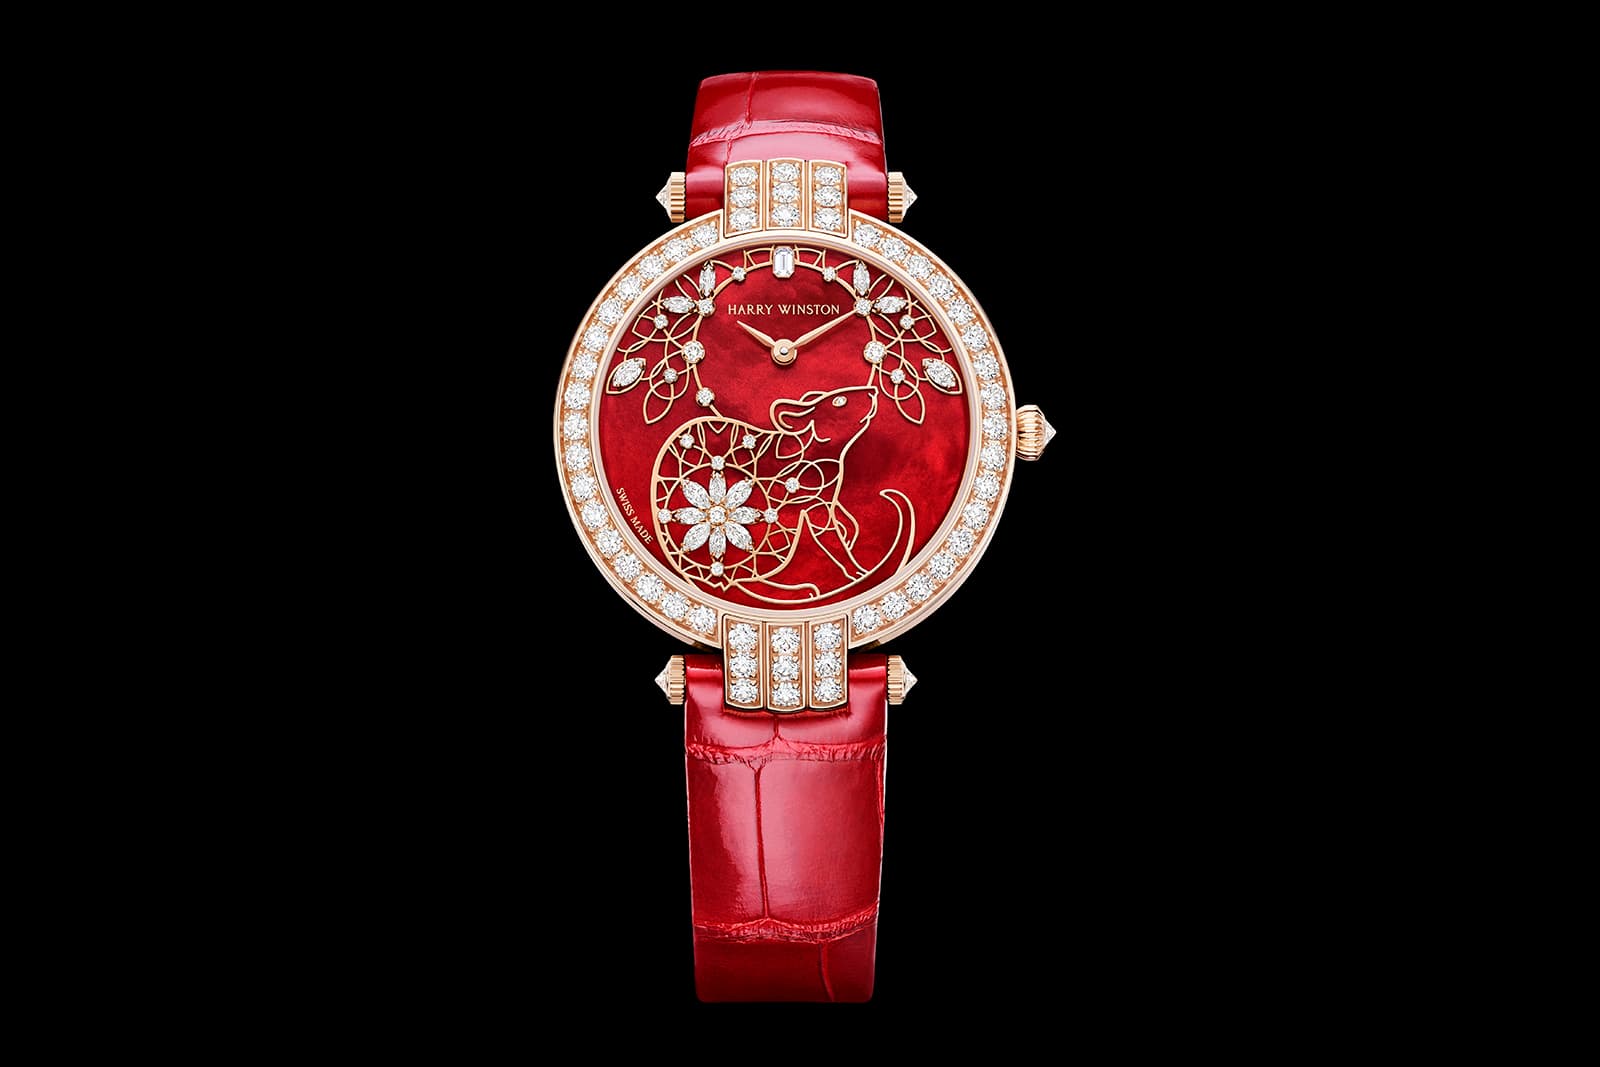 Часы Harry Winston Premier Chinese New Year Automatic 36mm из розового золота с перламутром и 109 бриллиантами общим весом 2.91ct